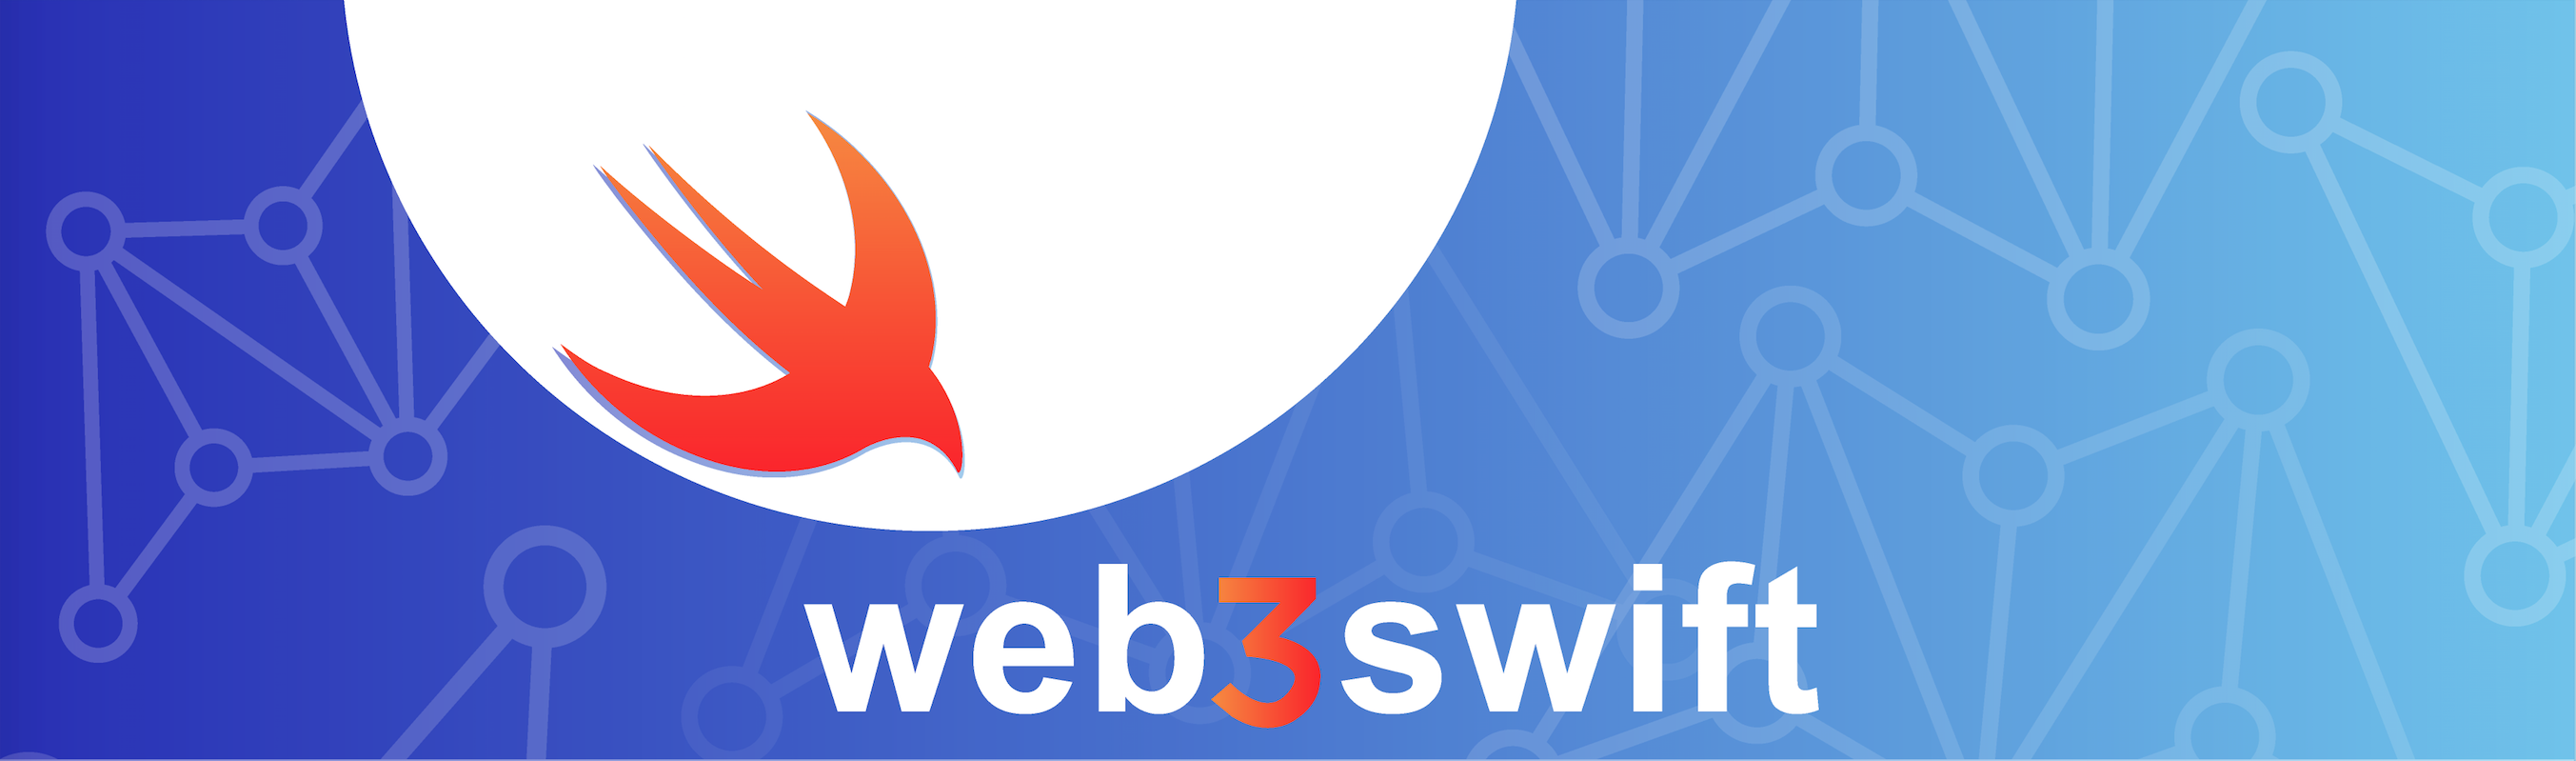 web3swift-logo.png